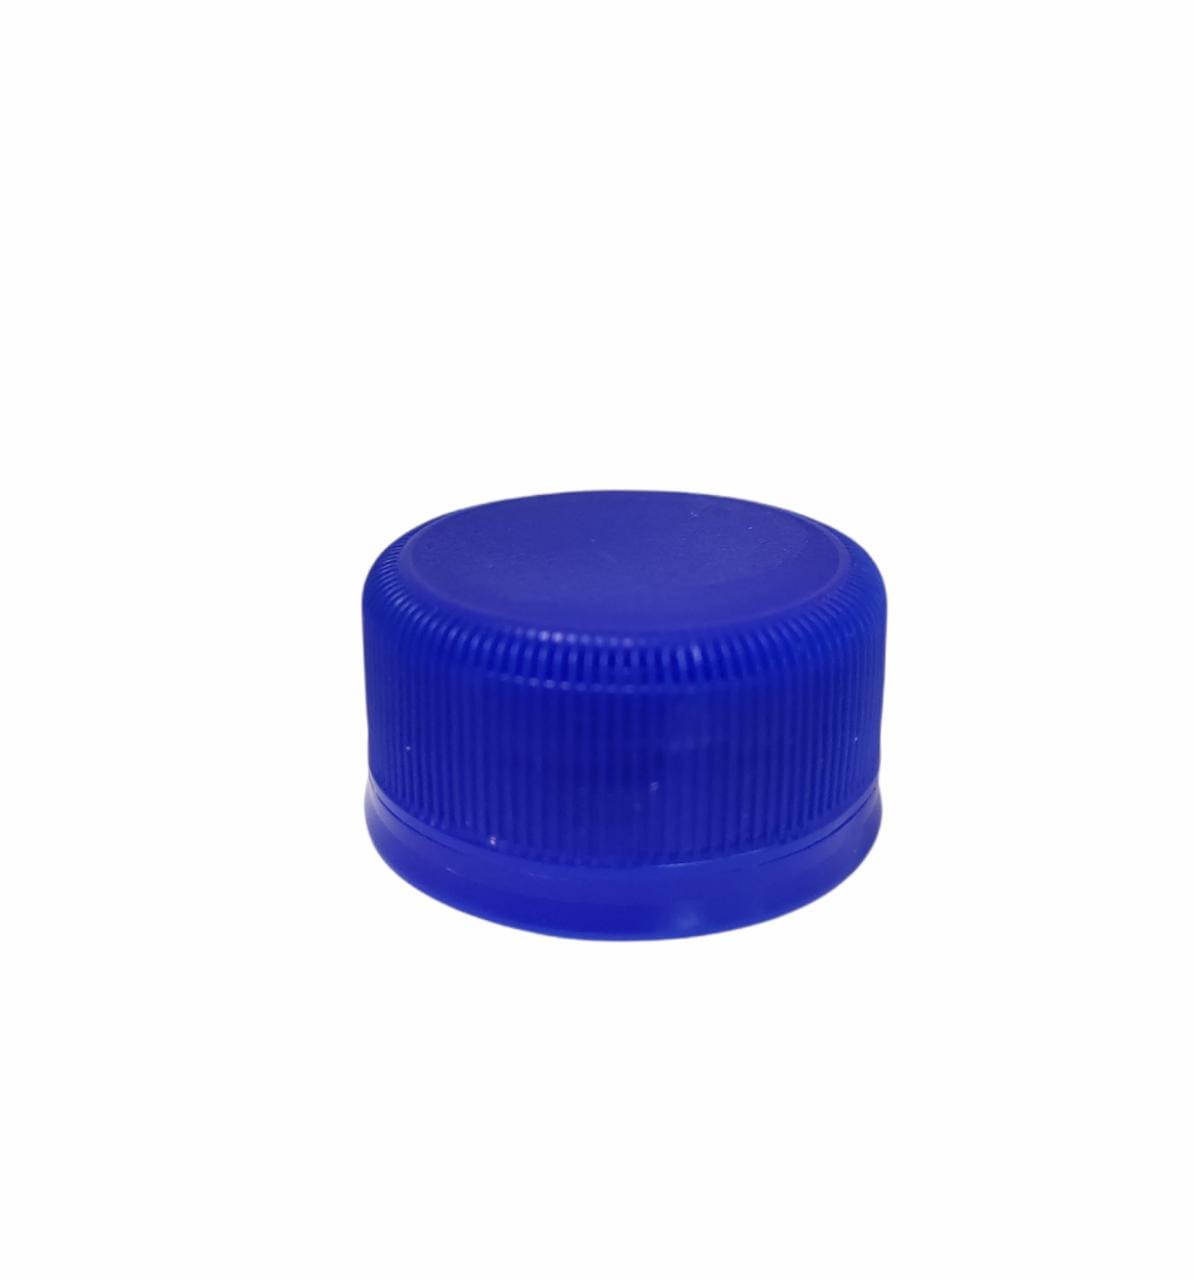 1.5L Plastic Water Bottle Diamond Blue BOT127